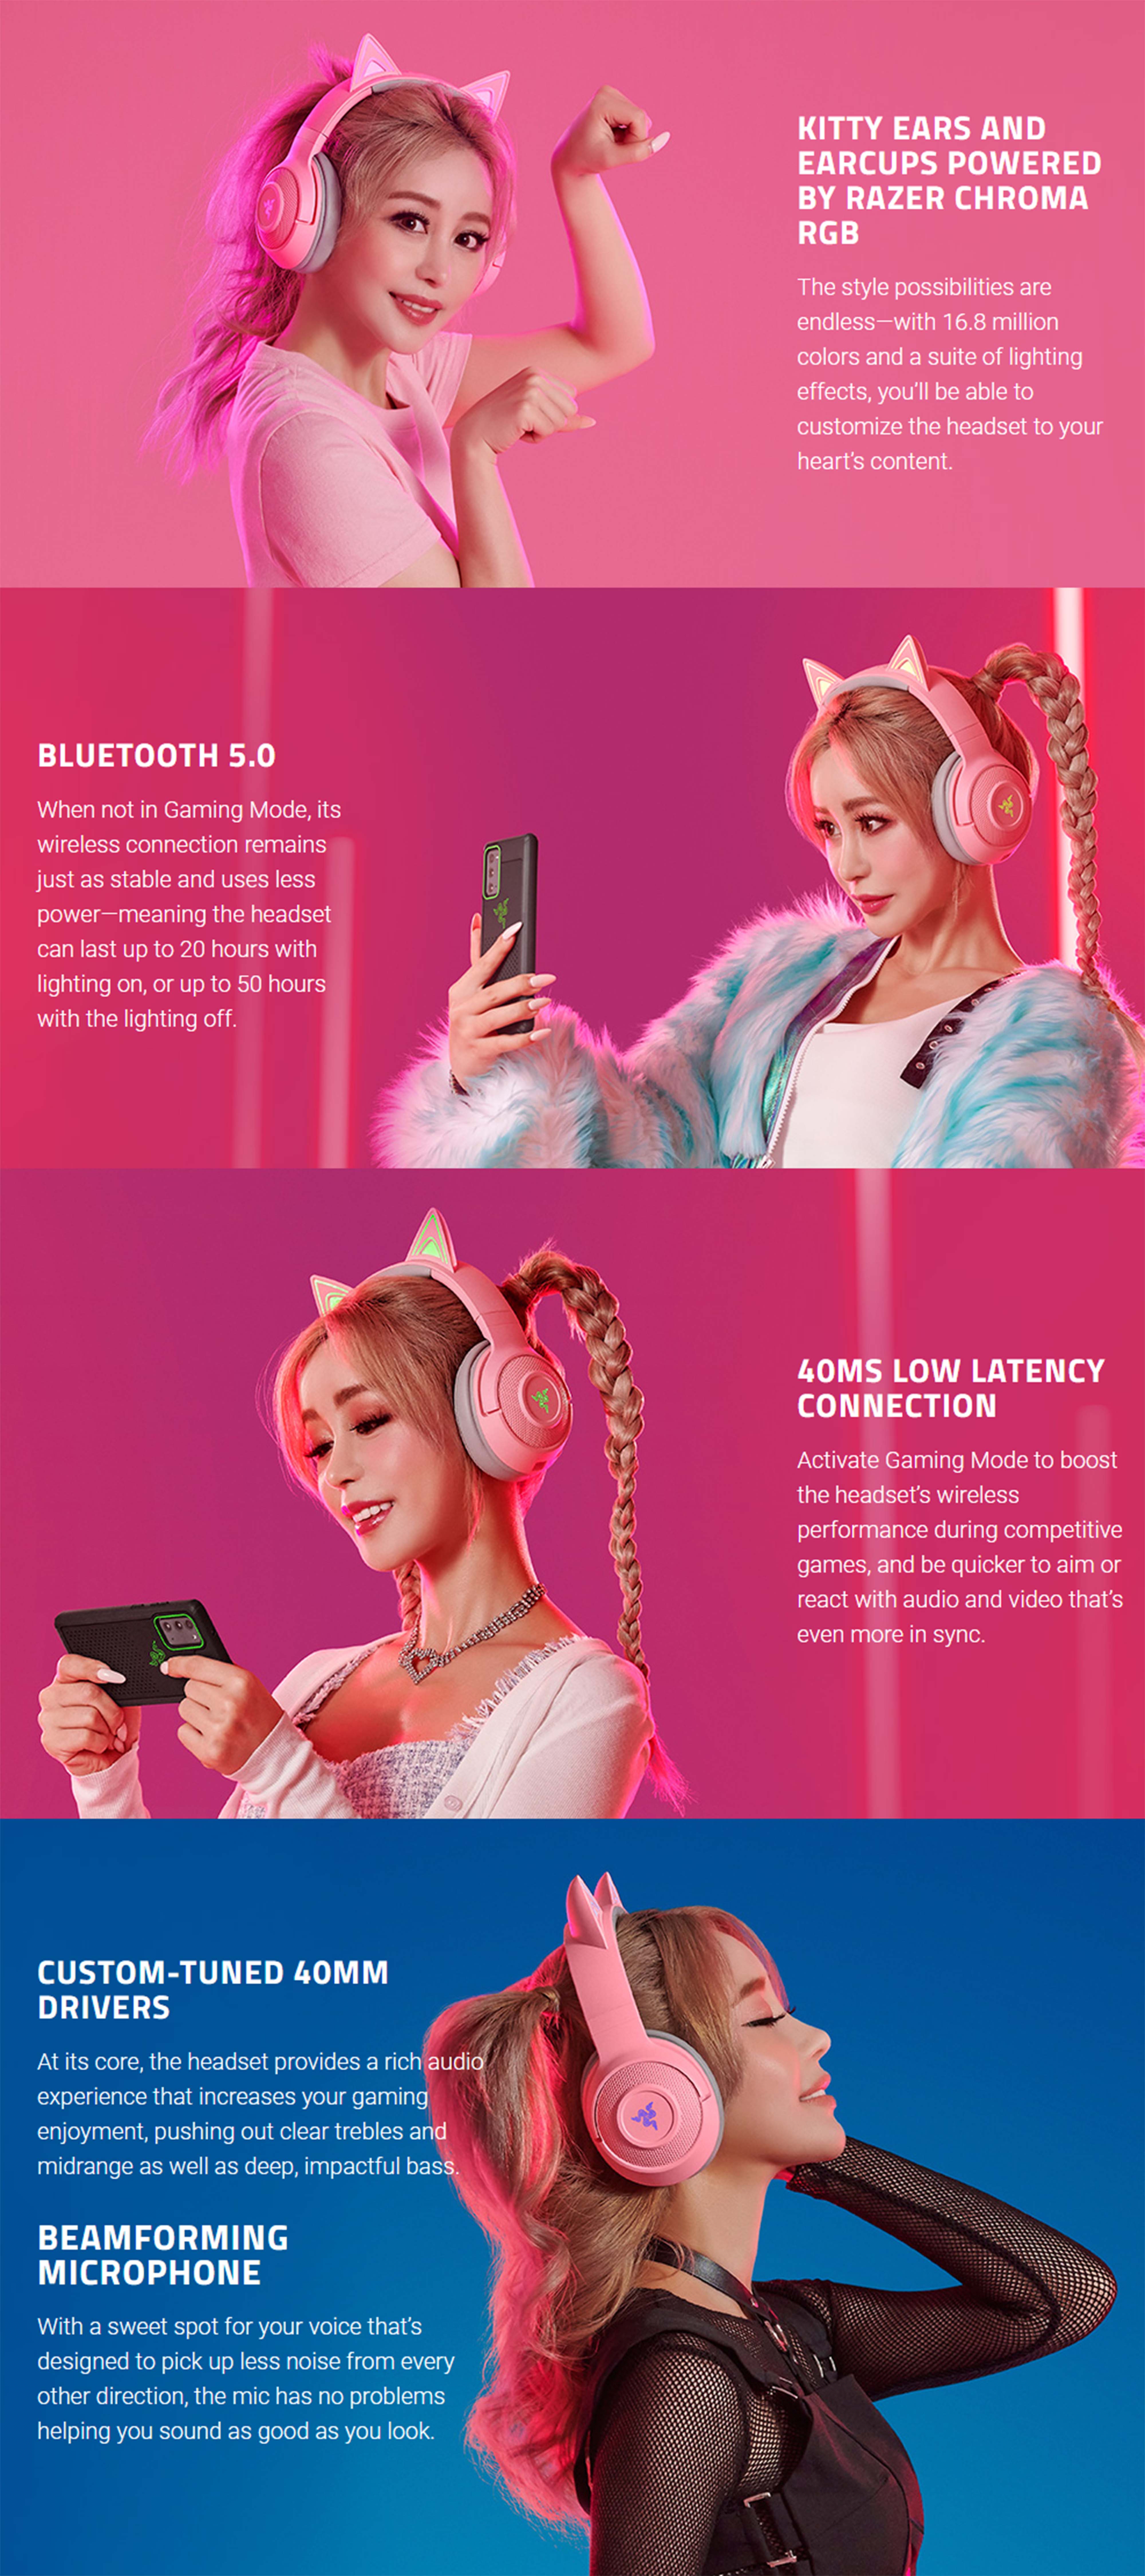 Headphones-Razer-Kraken-BT-Kitty-Edition-Wireless-Chroma-RGB-Headset-Quartz-2